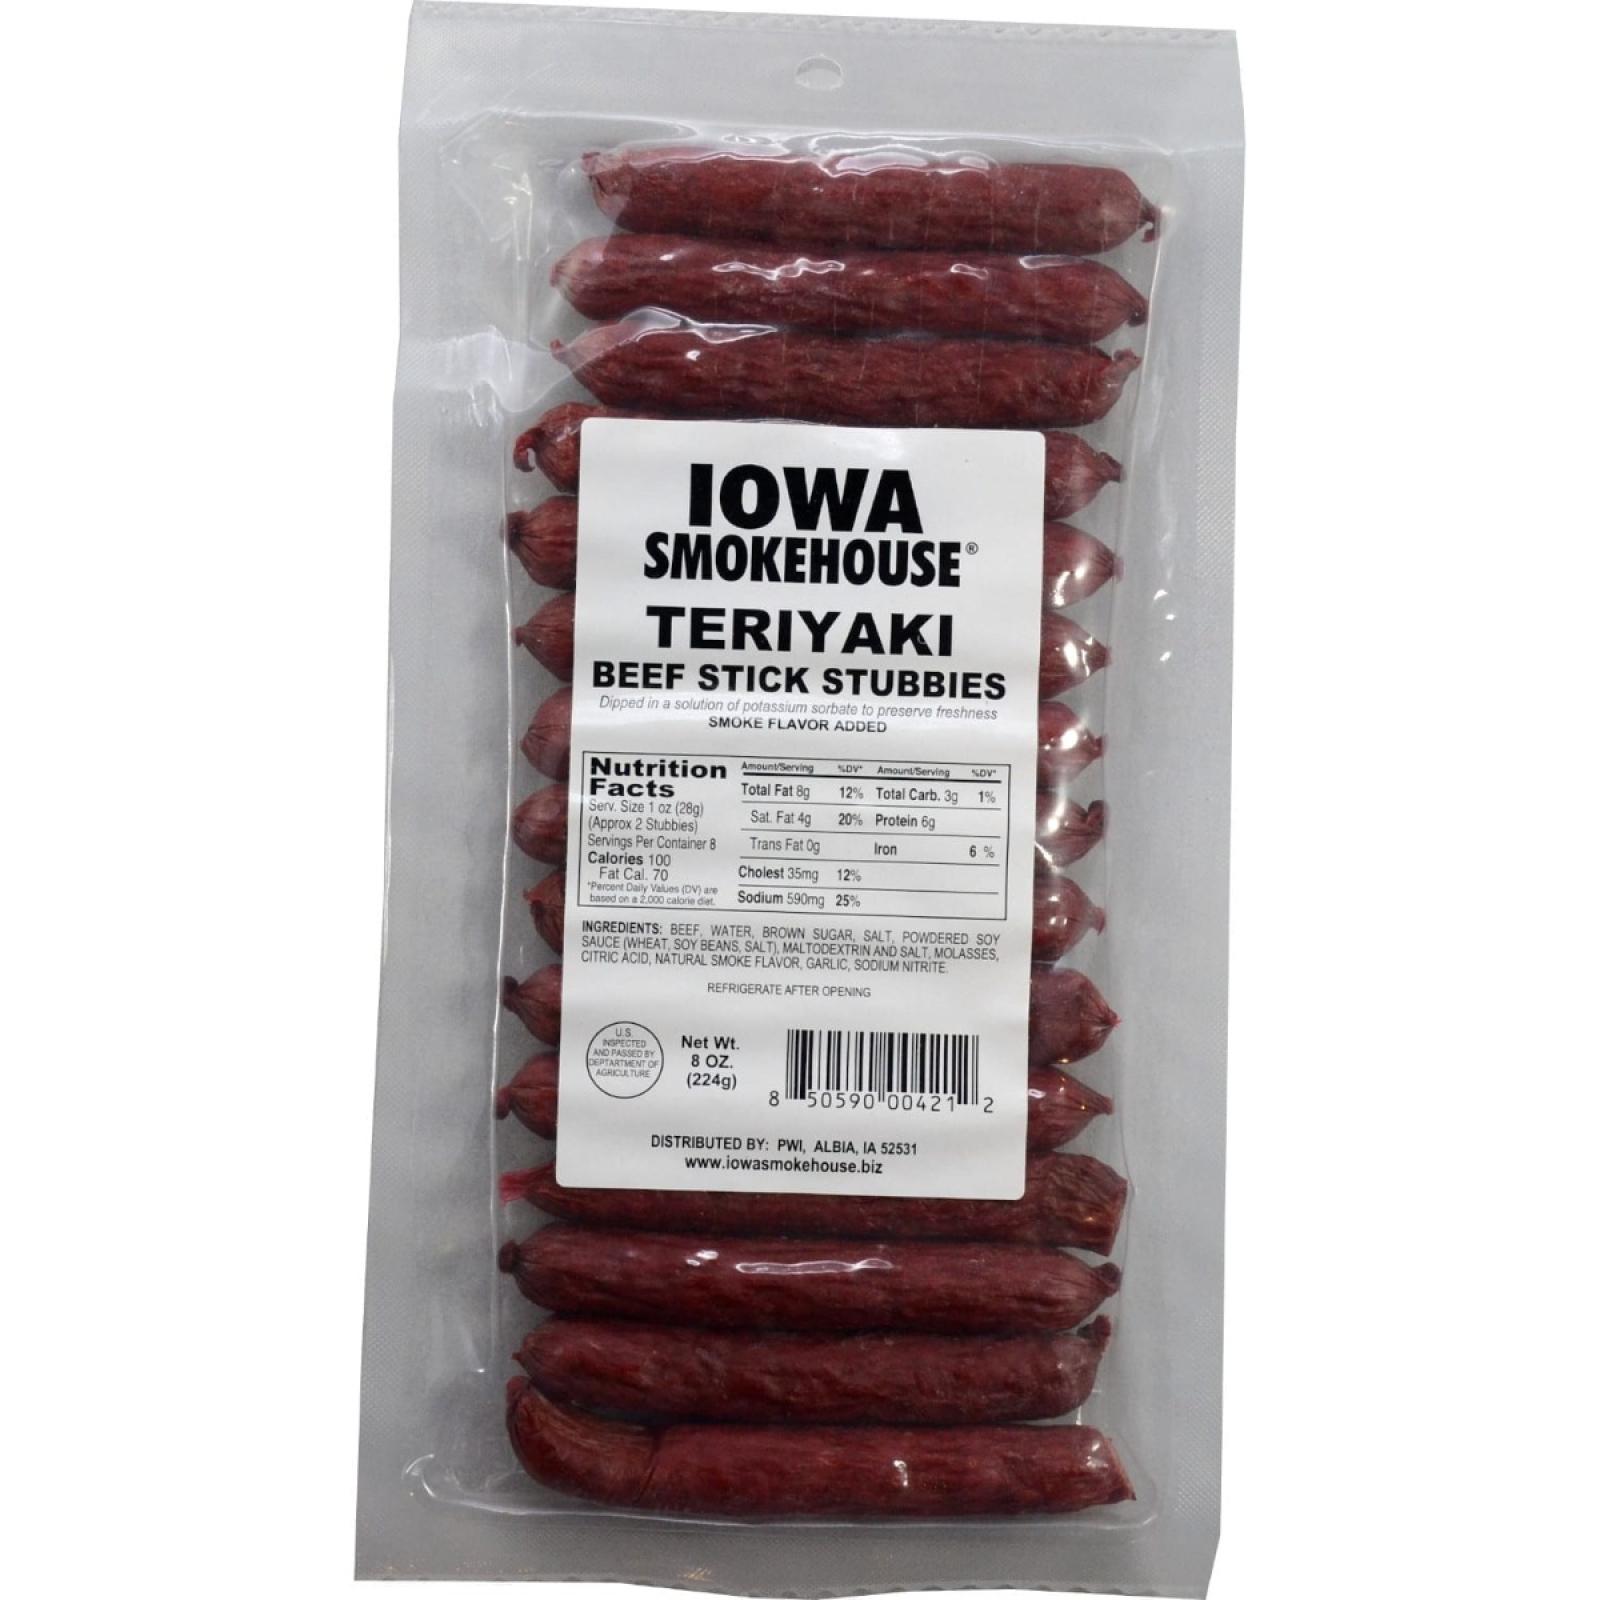 Iowa Smokehouse Teriyaki Beef Stick Stubbies